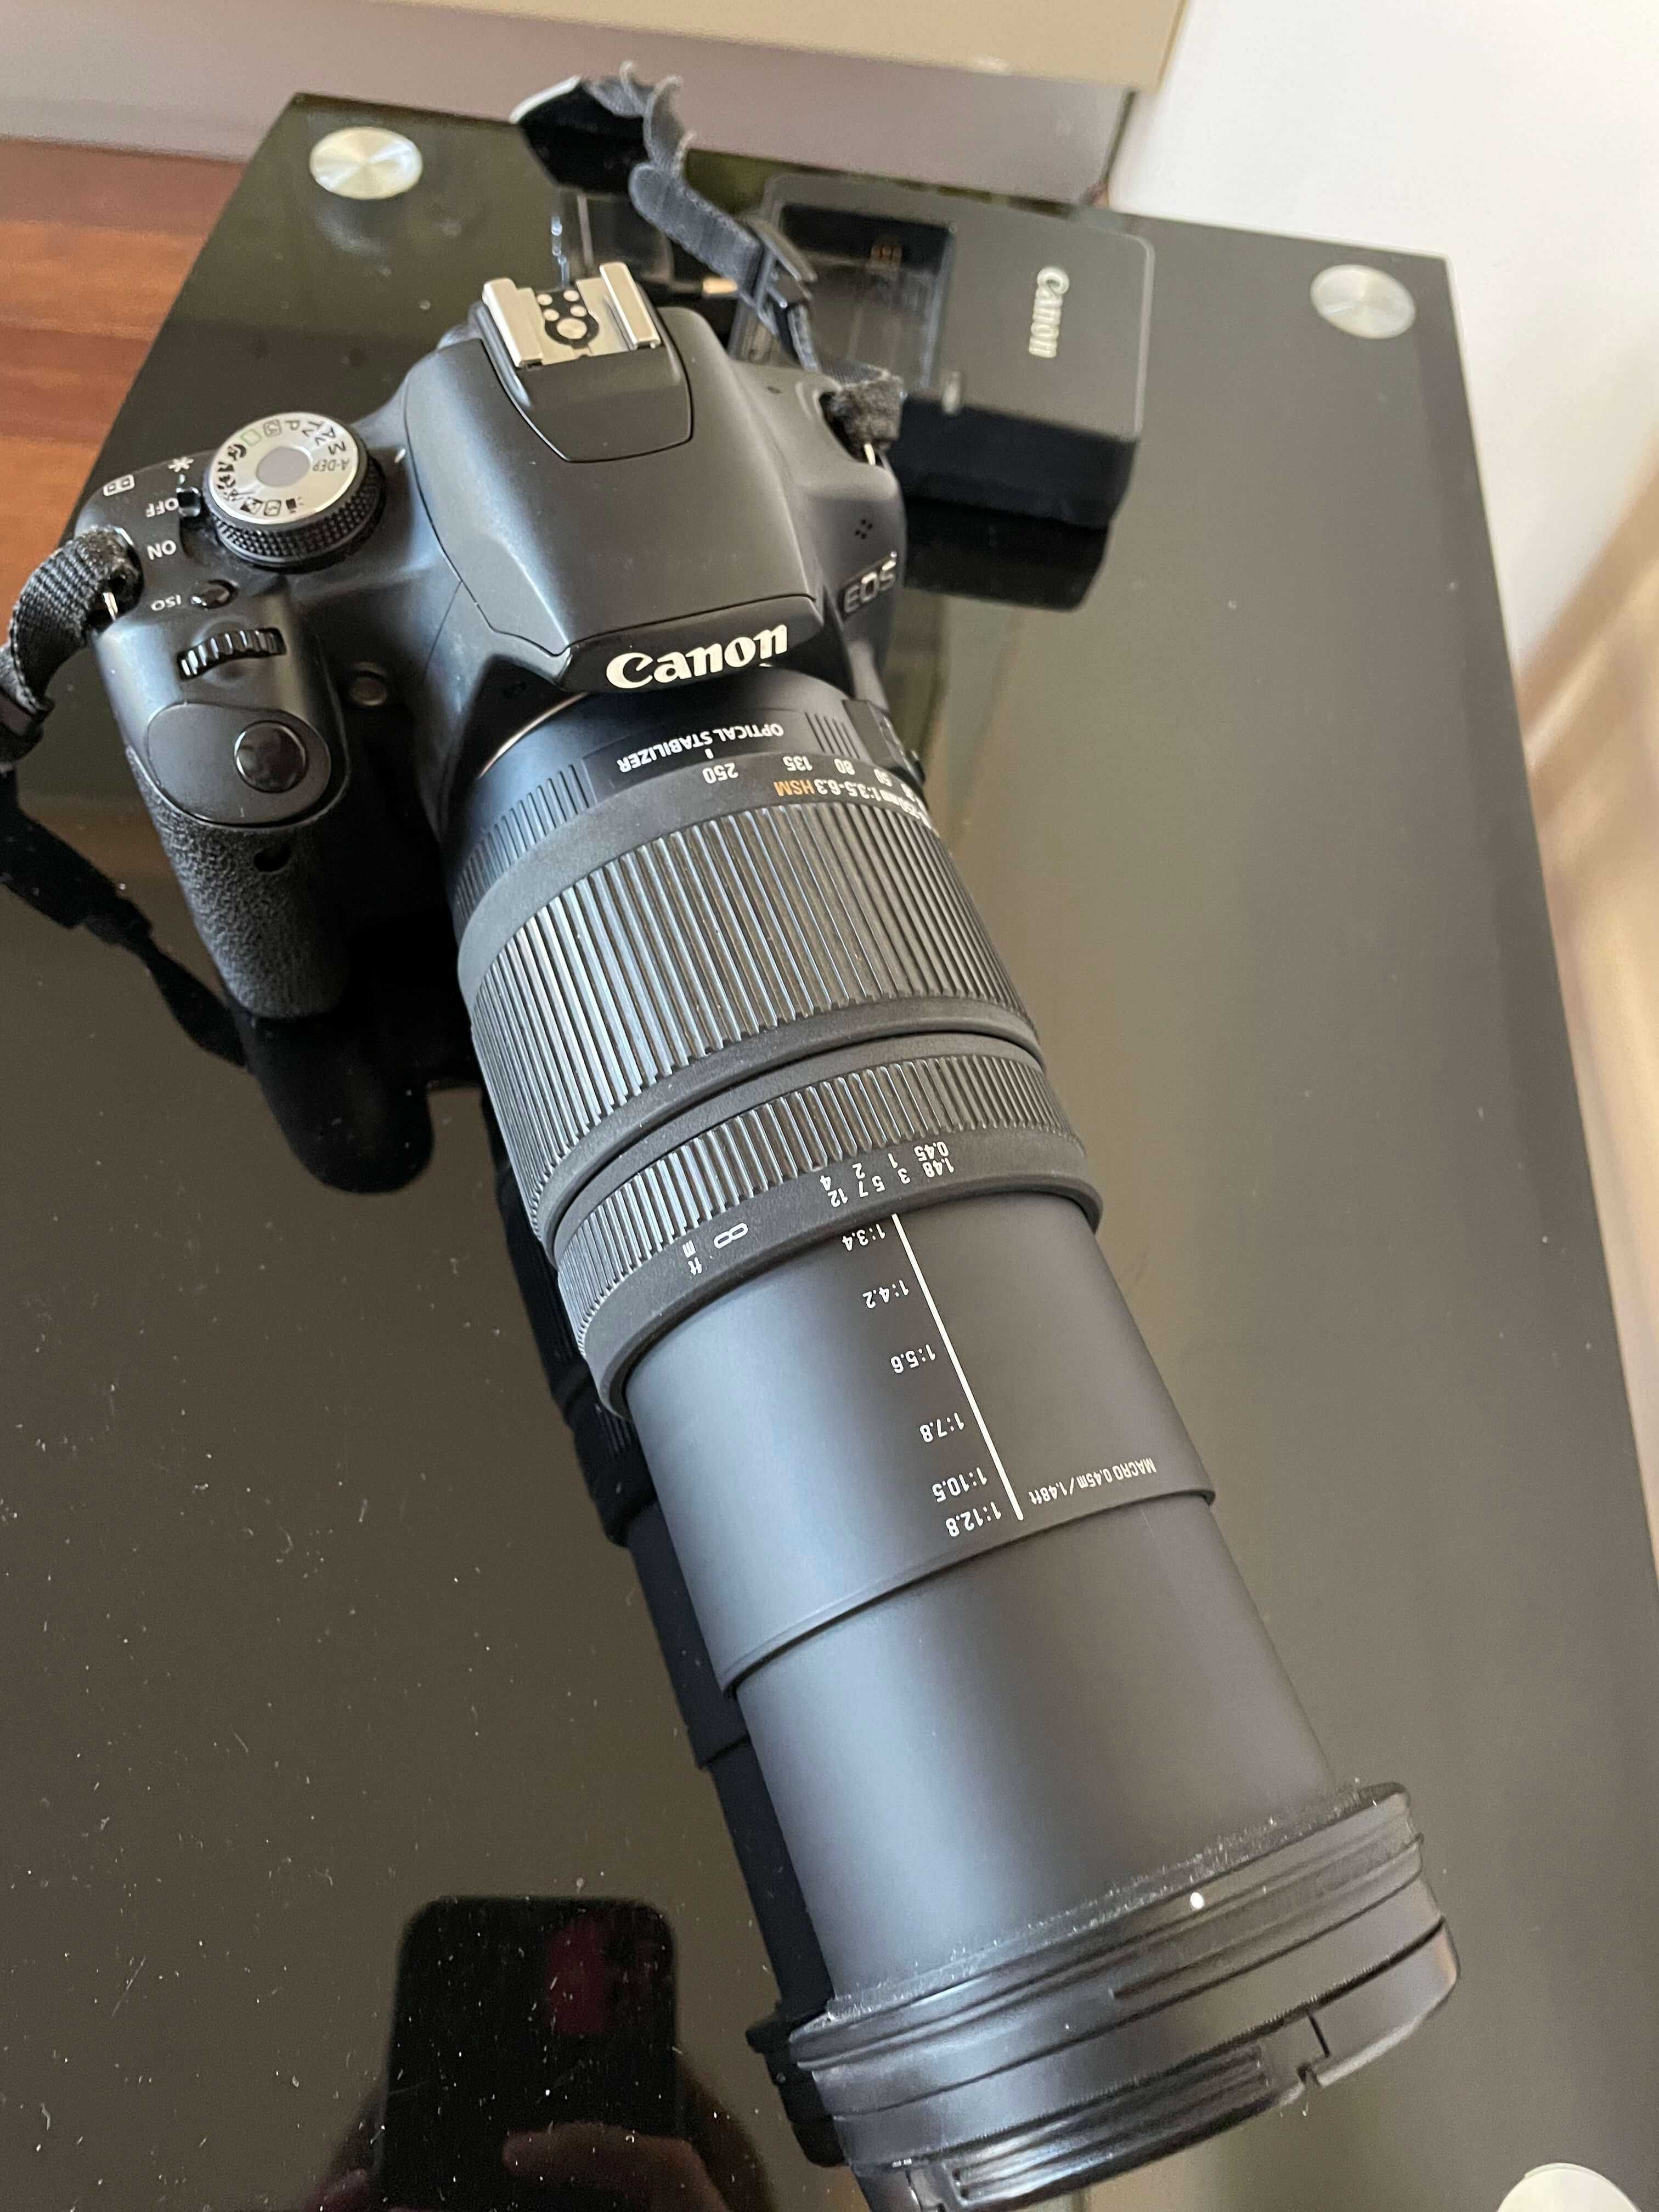 Aparat Canon + obiektyw Sigma